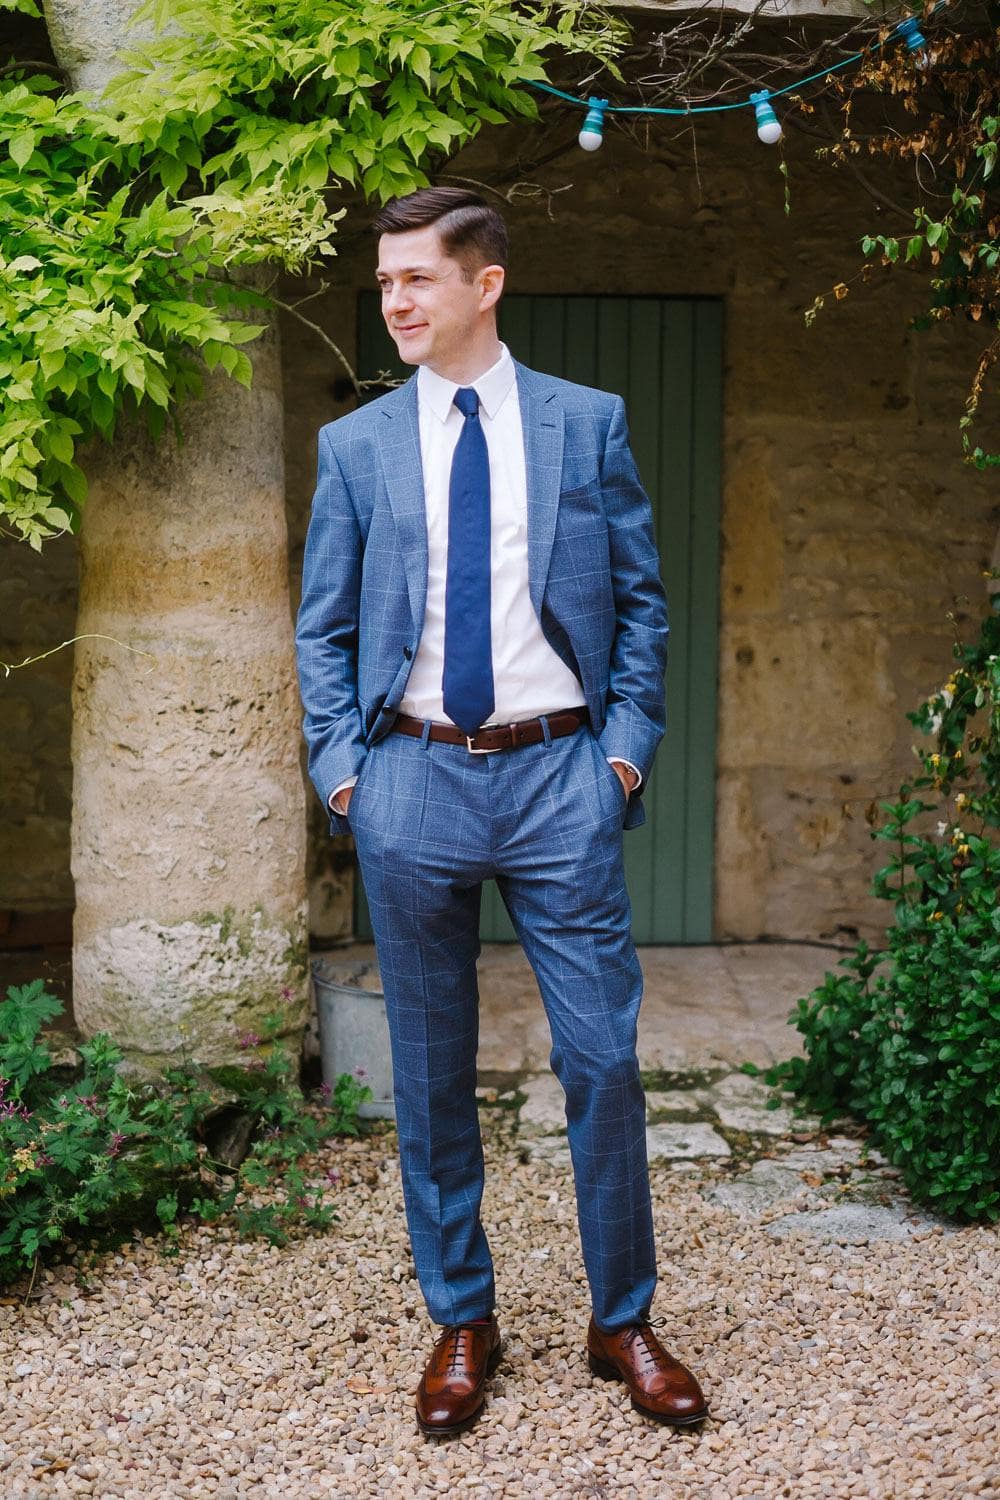 groom suit hugo boss instagram details Chateau Puissentut www.jesuscaballero.com #rusticwedding #minimalist #pronovias #weddingdress #gown #countryside #frenchwedding #ChateauPuissentut www.jesuscaballero.com